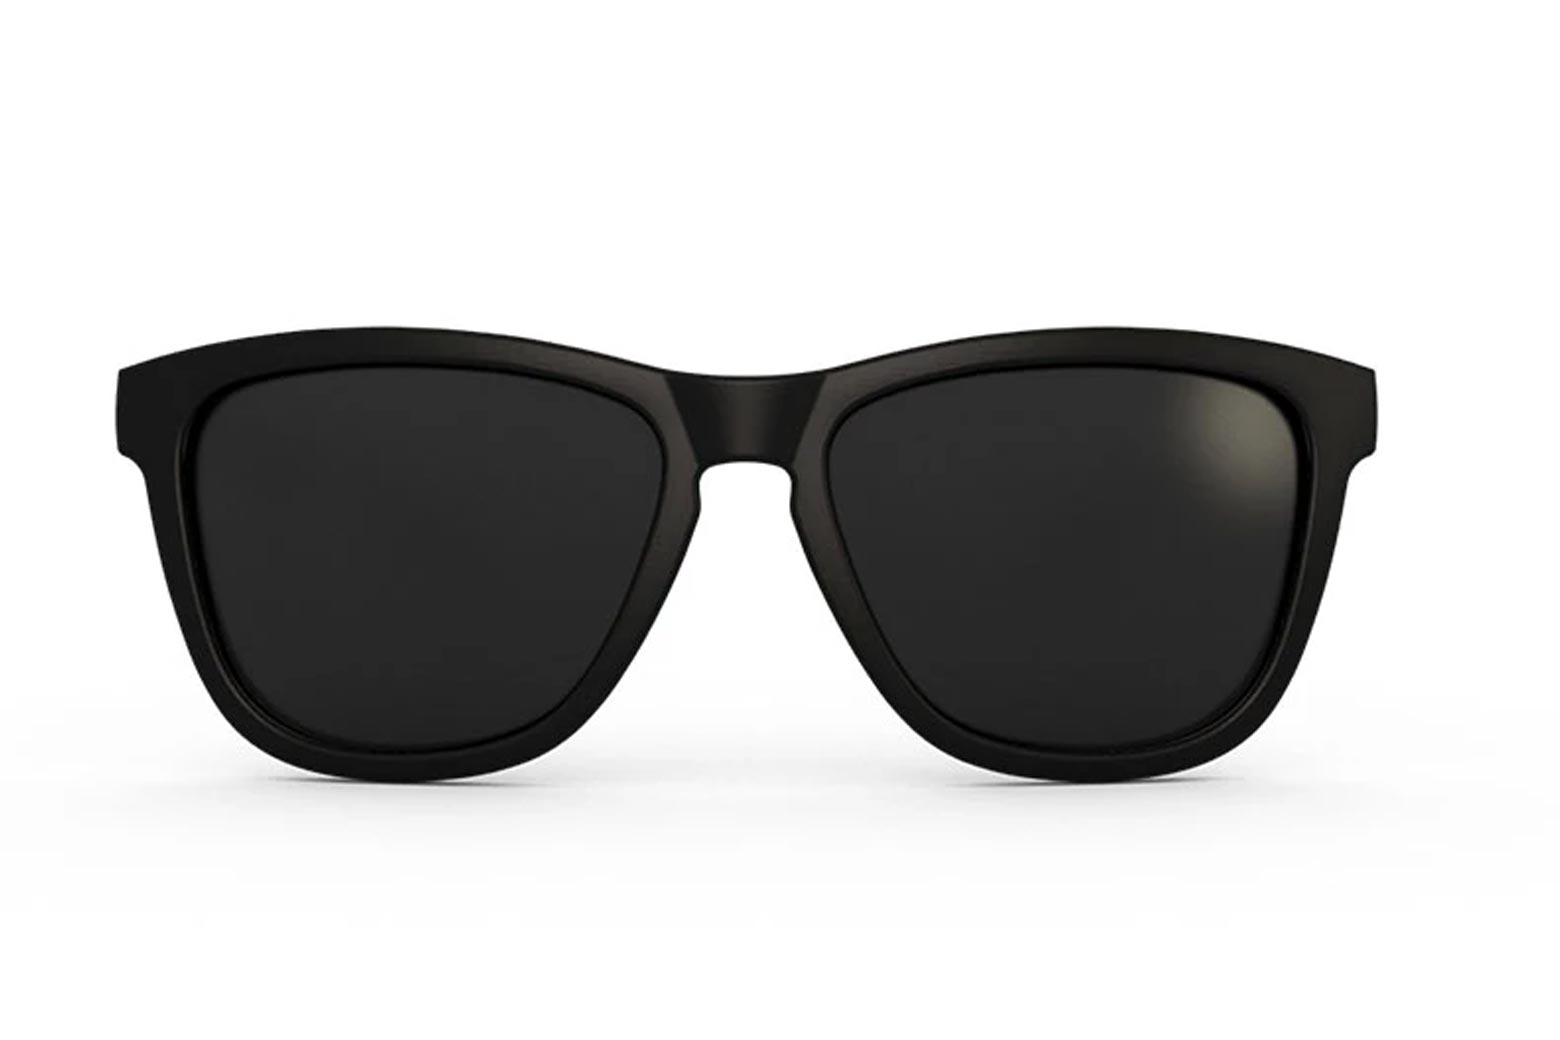 Black sunglasses.